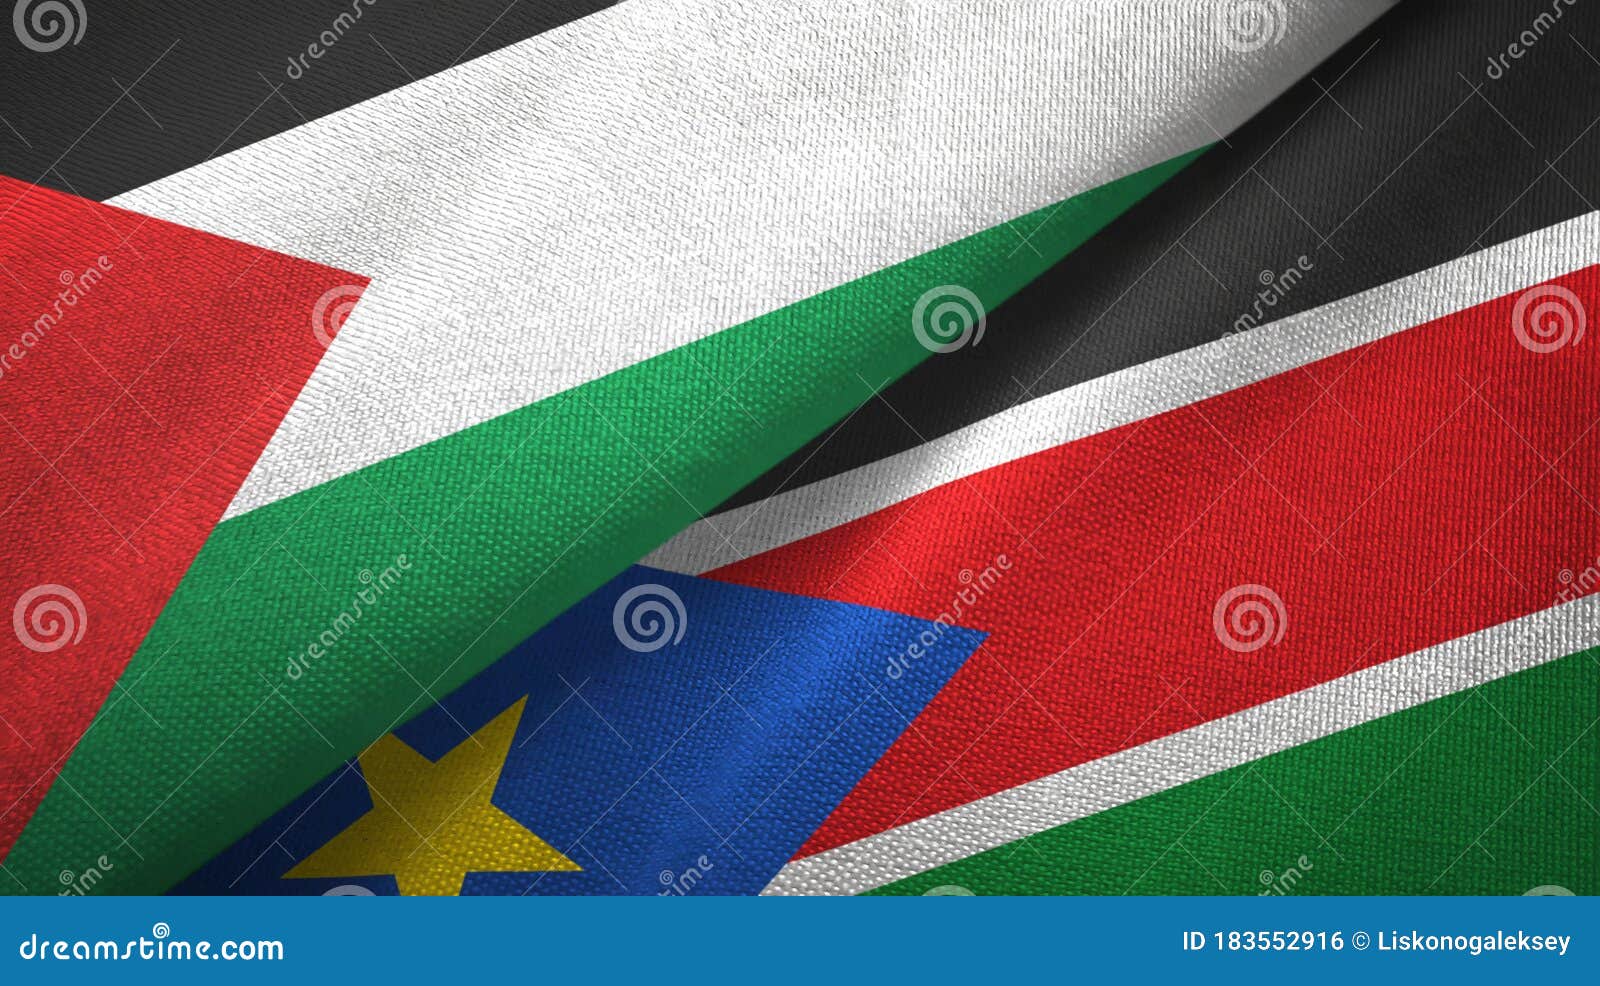 Sudan flag vs palestine